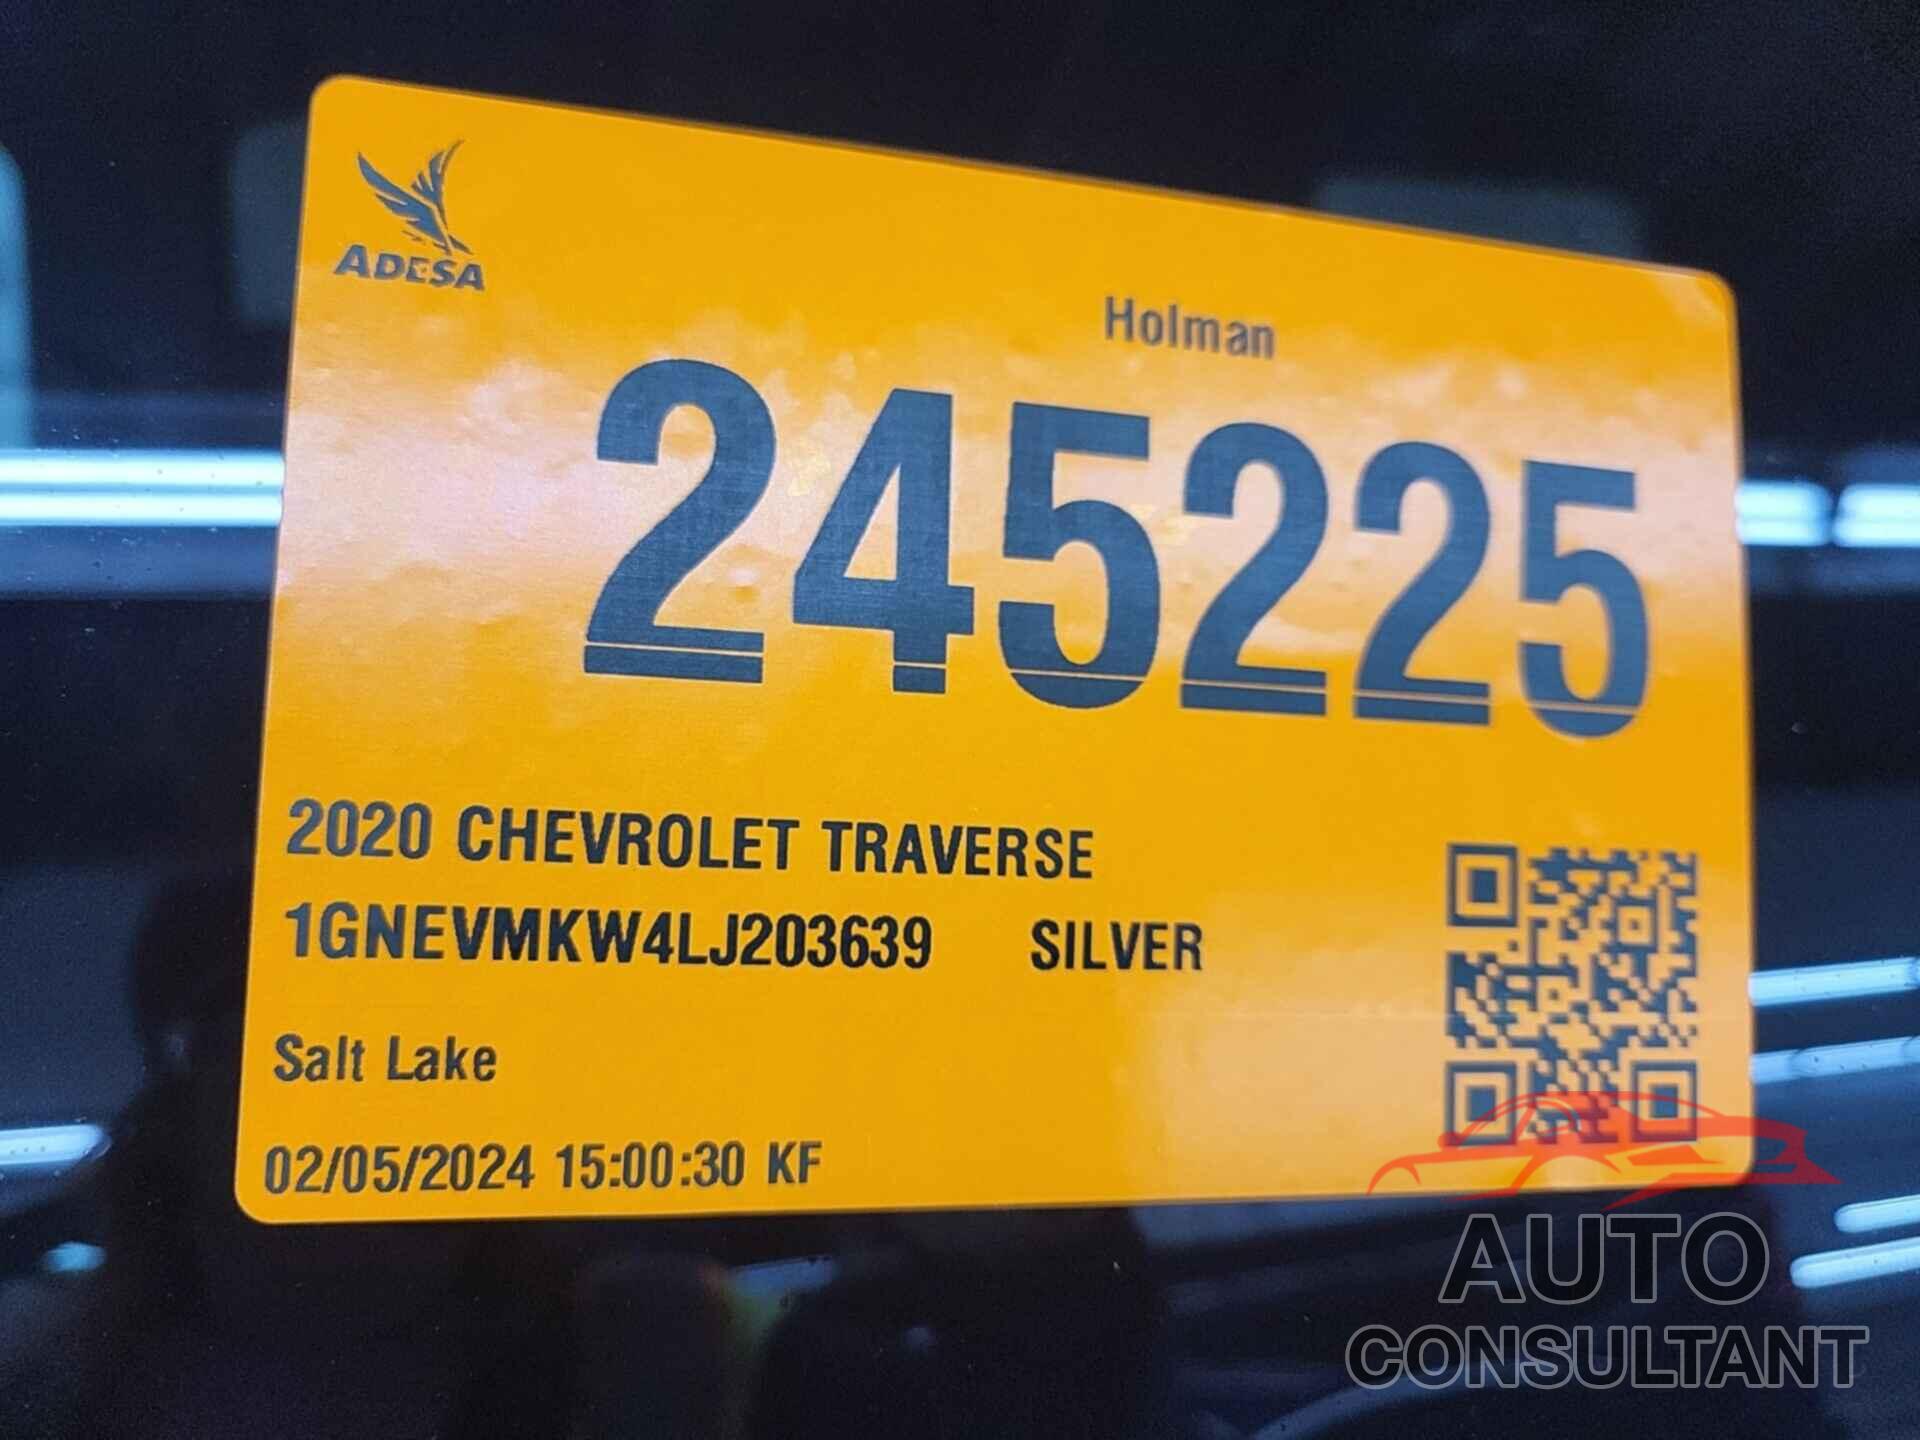 CHEVROLET TRAVERSE 2020 - 1GNEVMKW4LJ203639